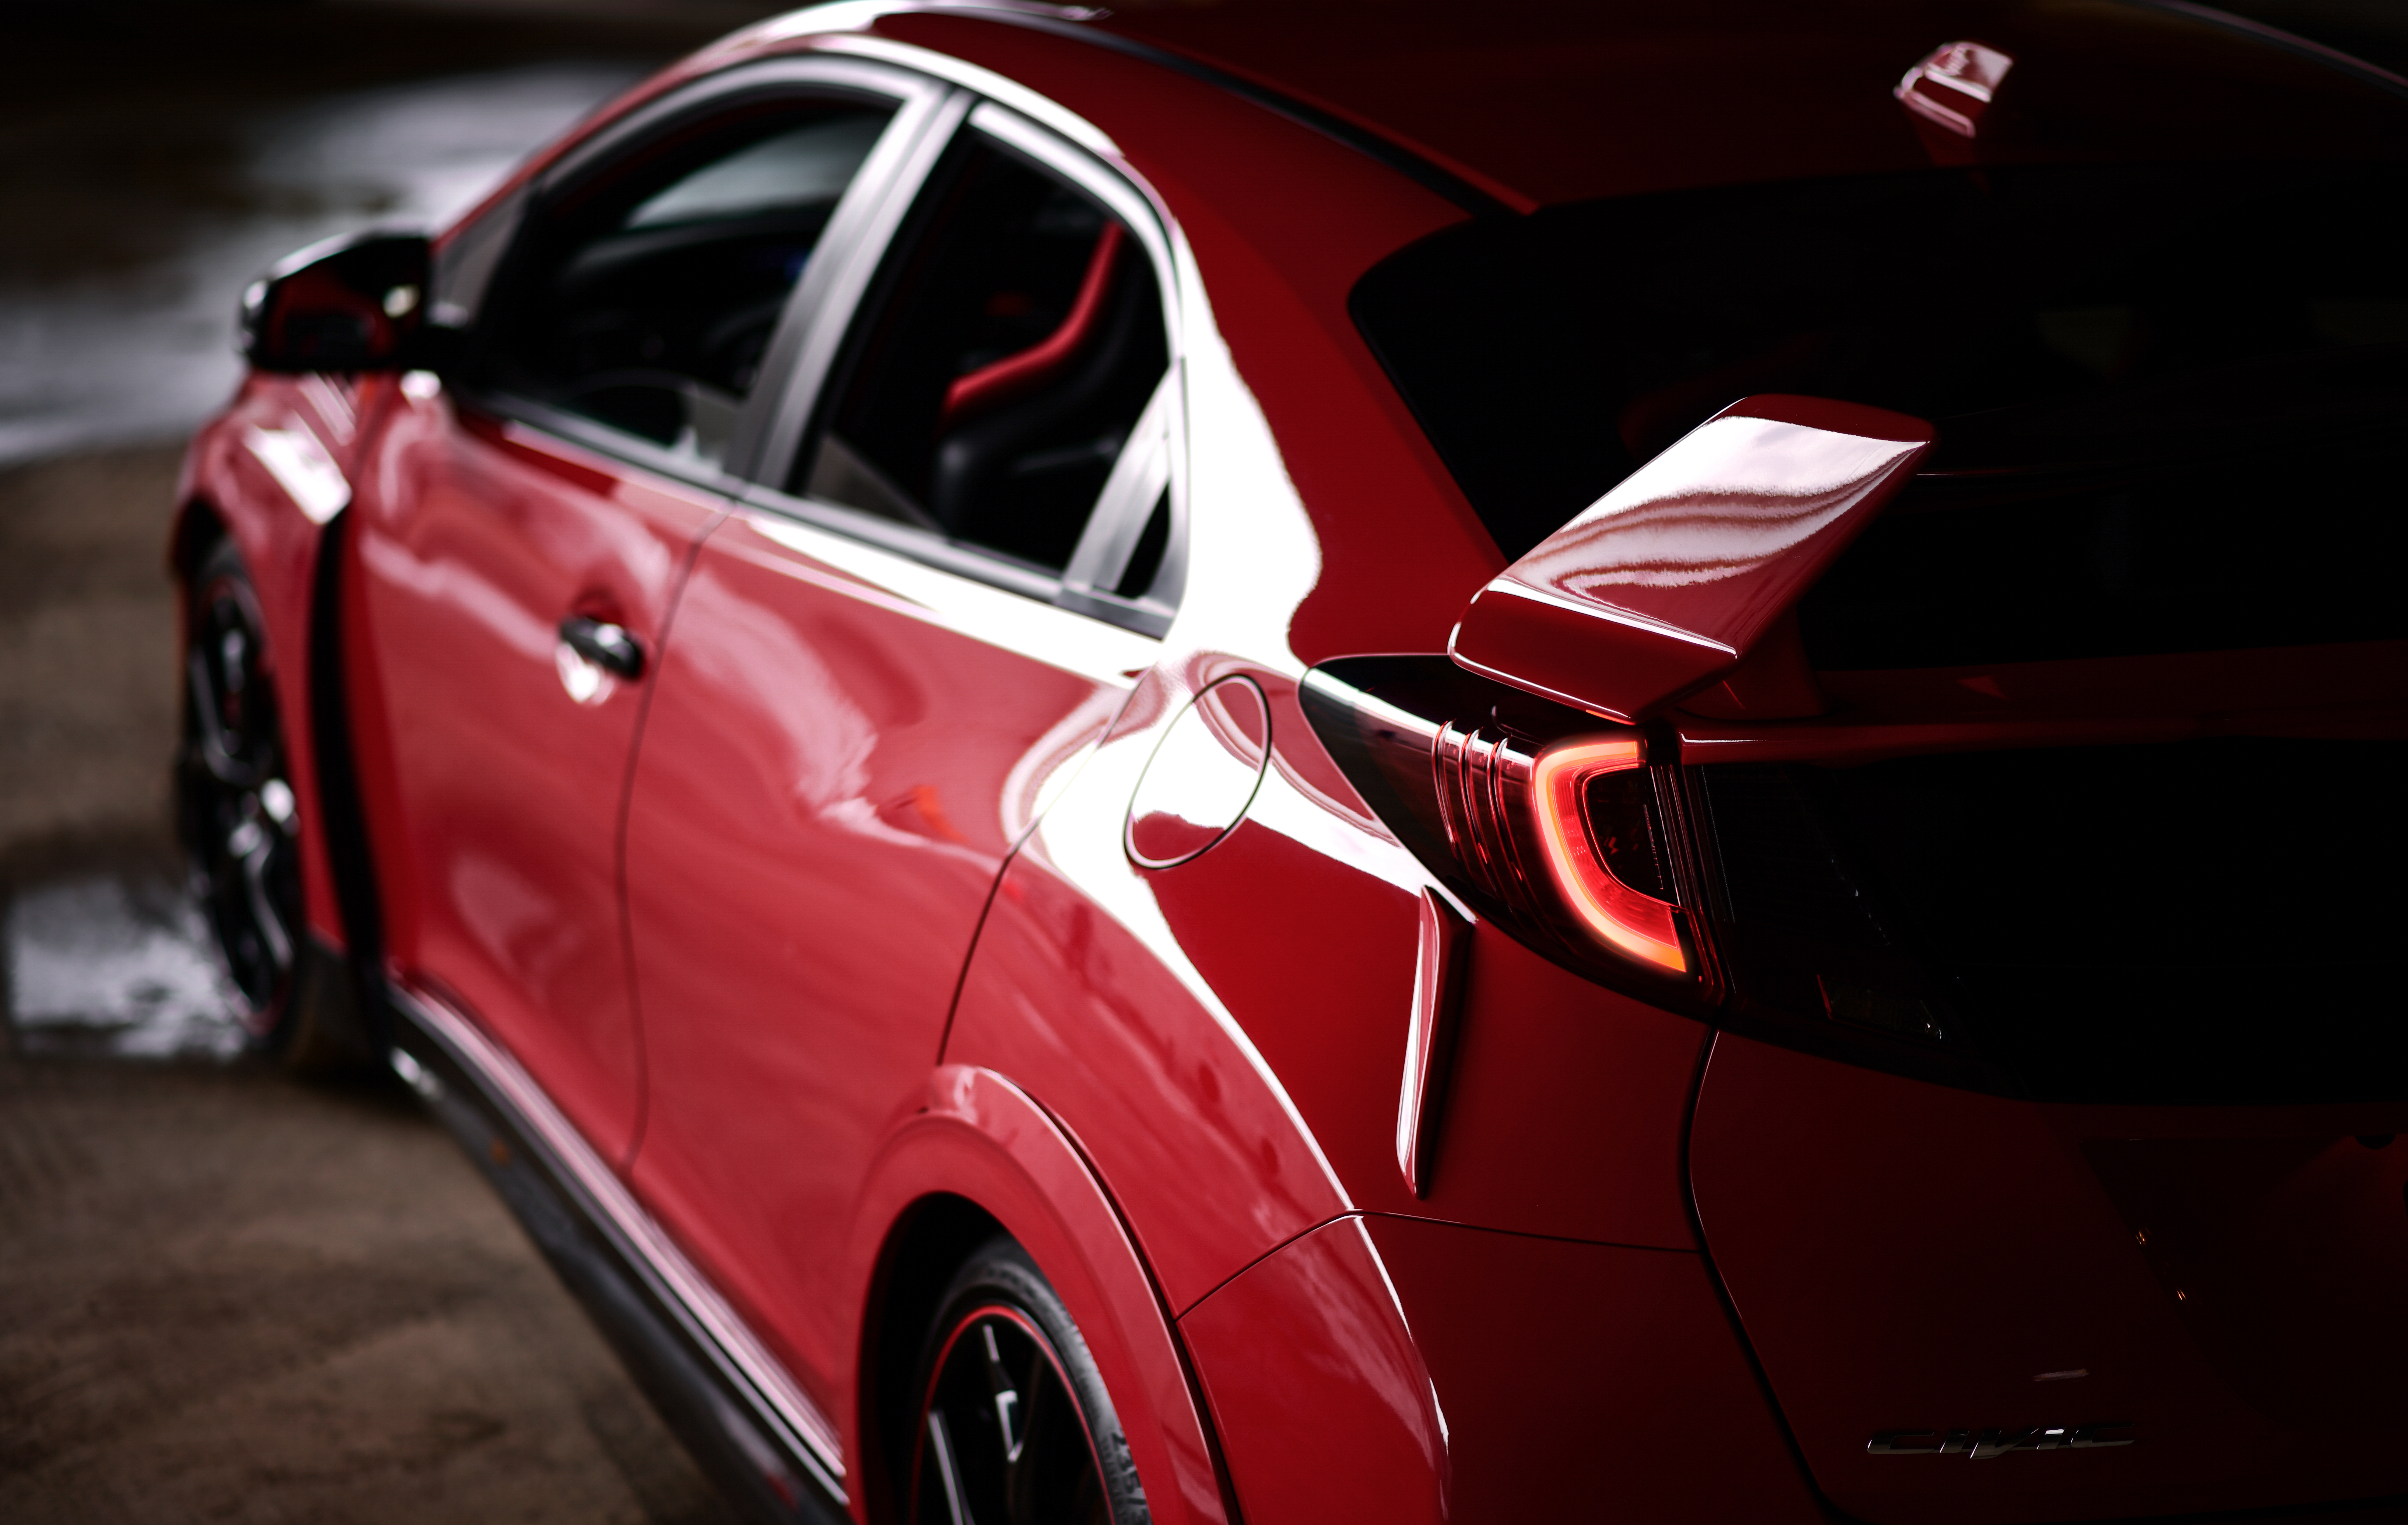 honda, cars, red, dark, car, machine, backlight, illumination, honda fk2 Free Stock Photo